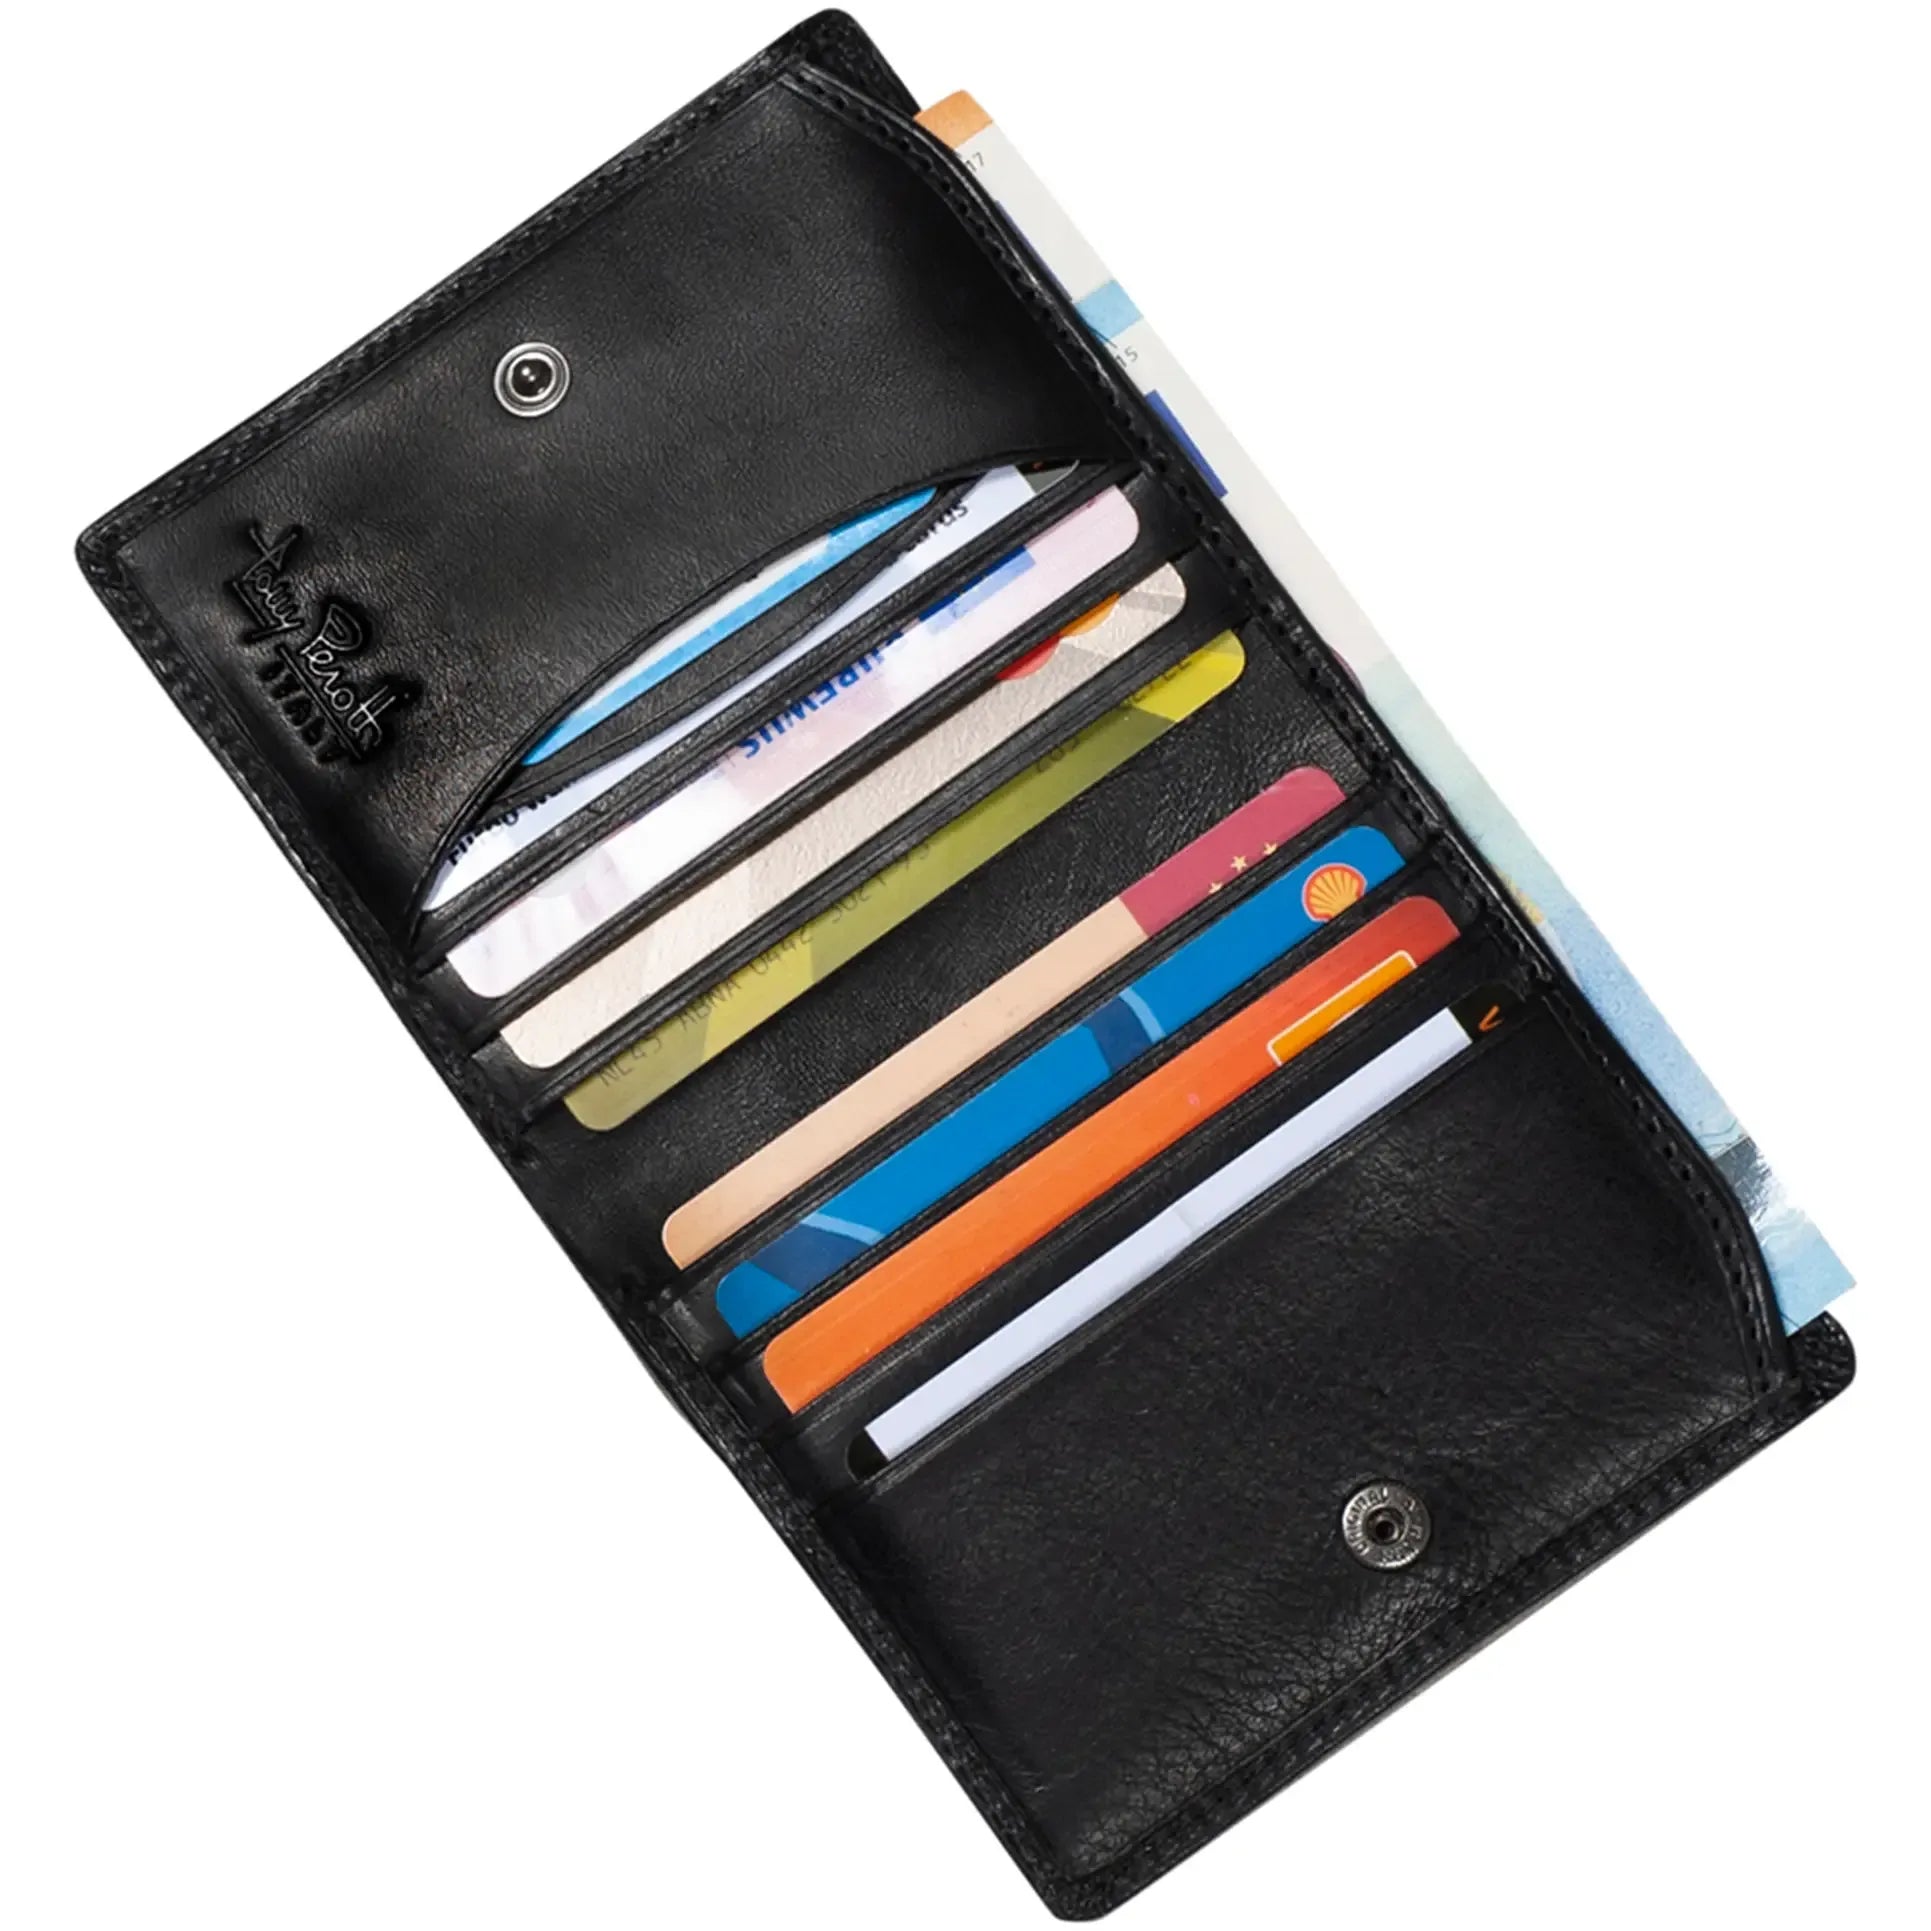 Tony Perotti Furbo men's wallet with Vienna box 10 cm - Dark brown